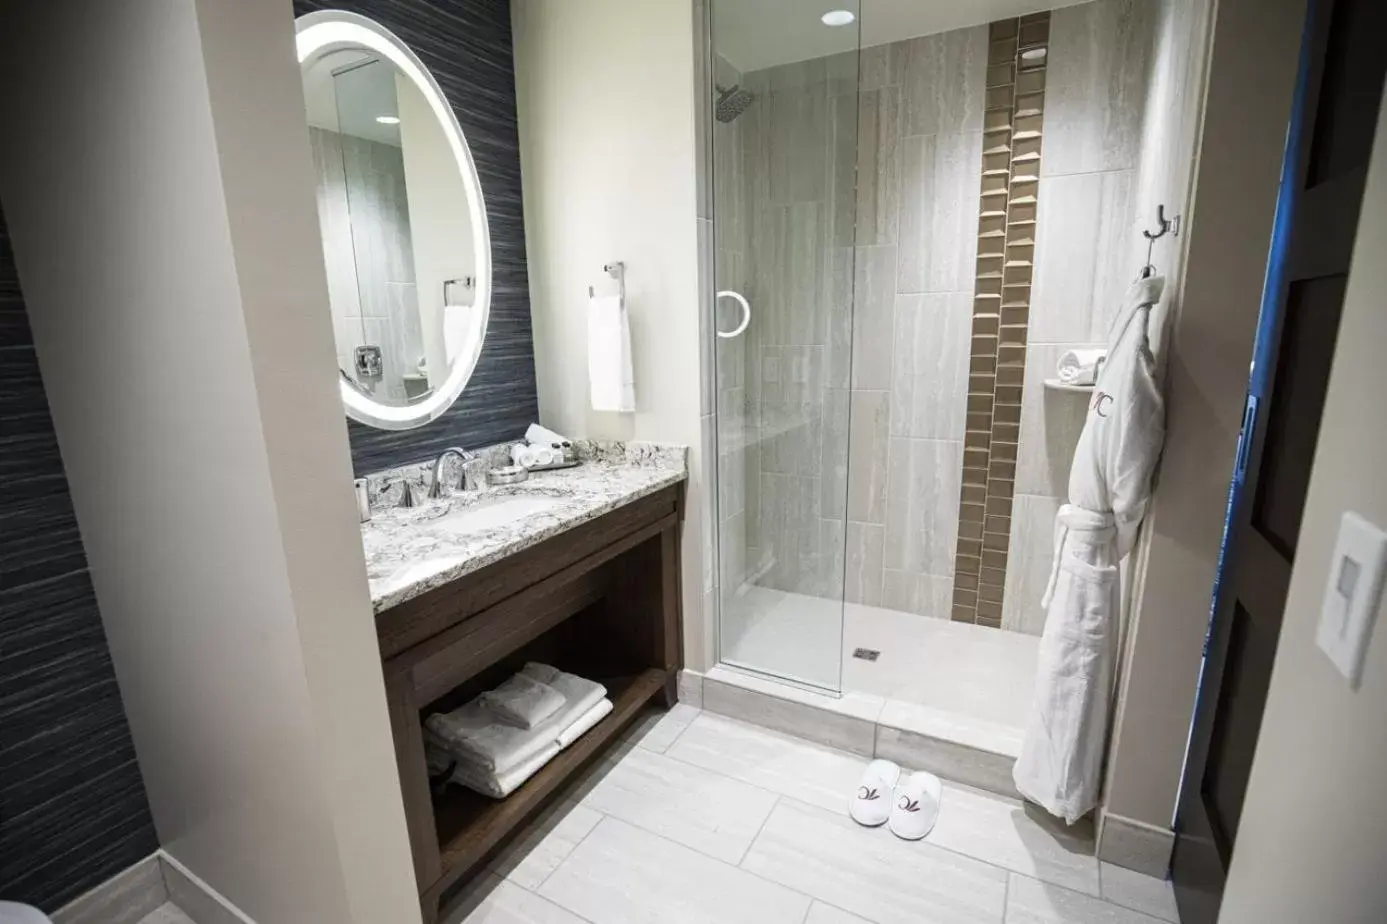 Shower, Bathroom in Choctaw Casino & Resort, Durant